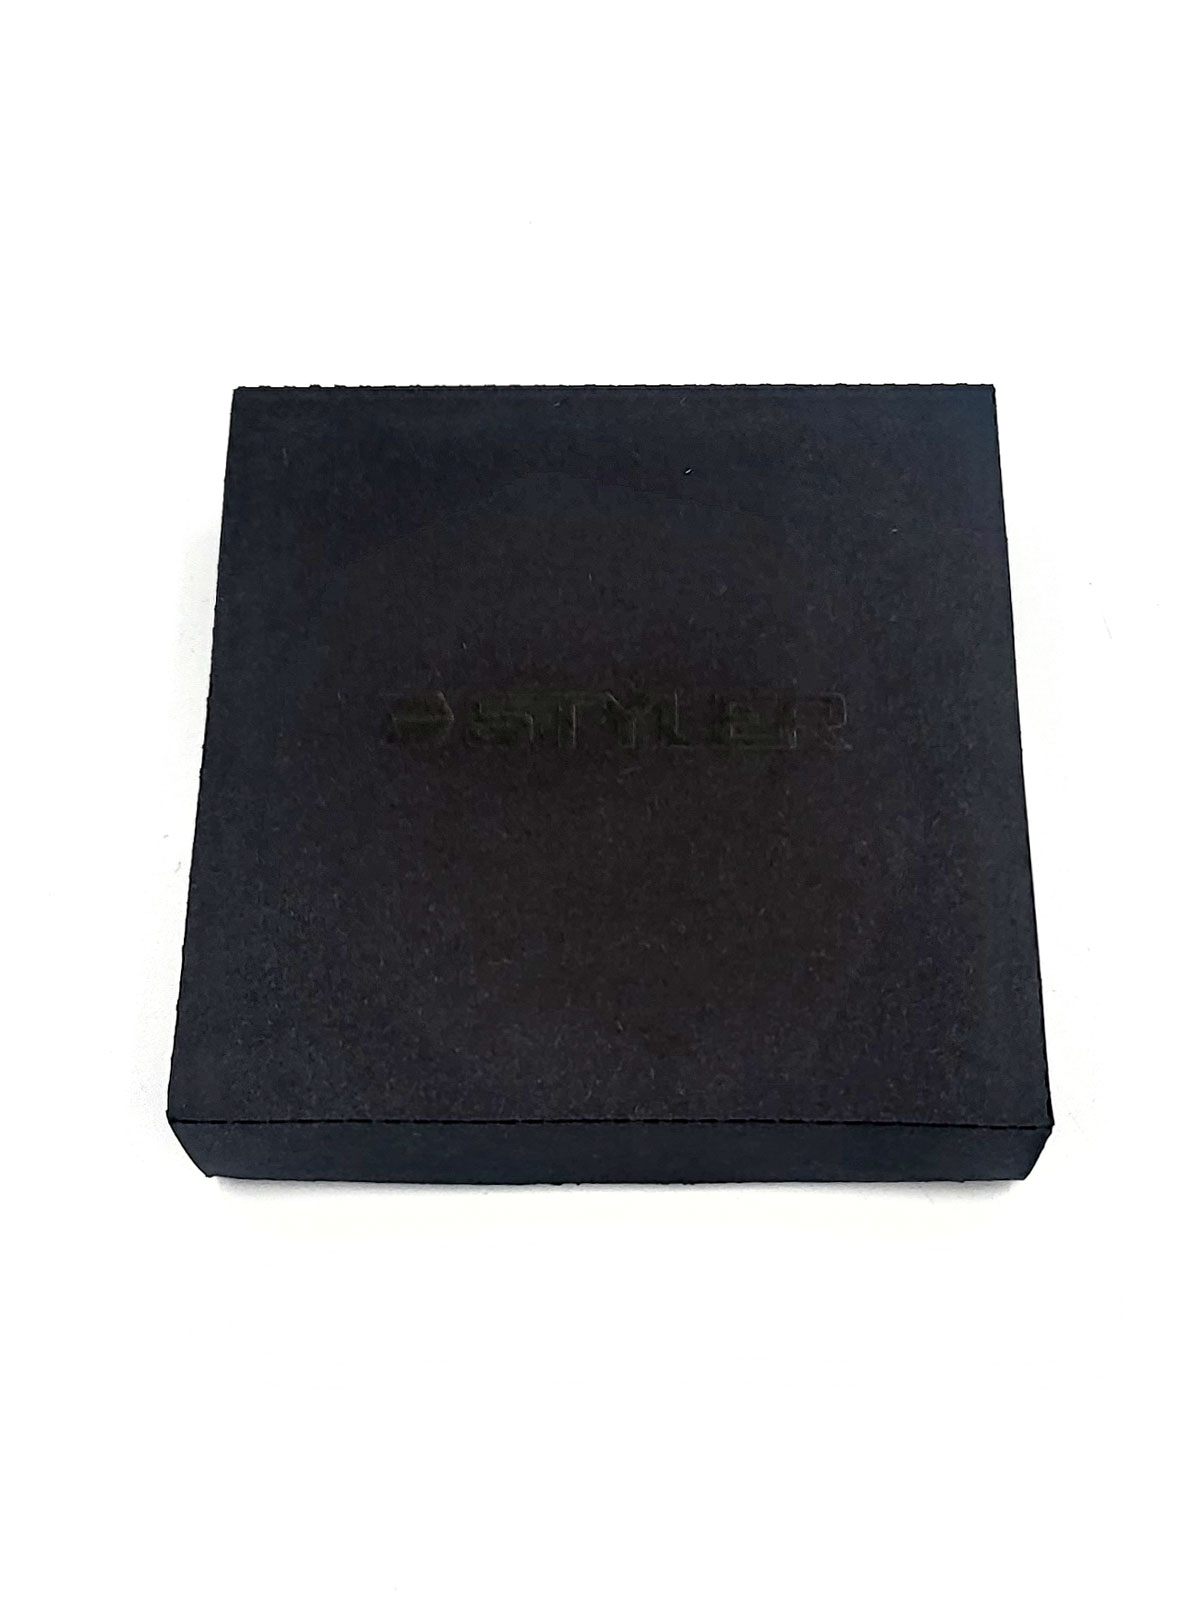 Black classic wallet - 10850 - € 33.18 img4